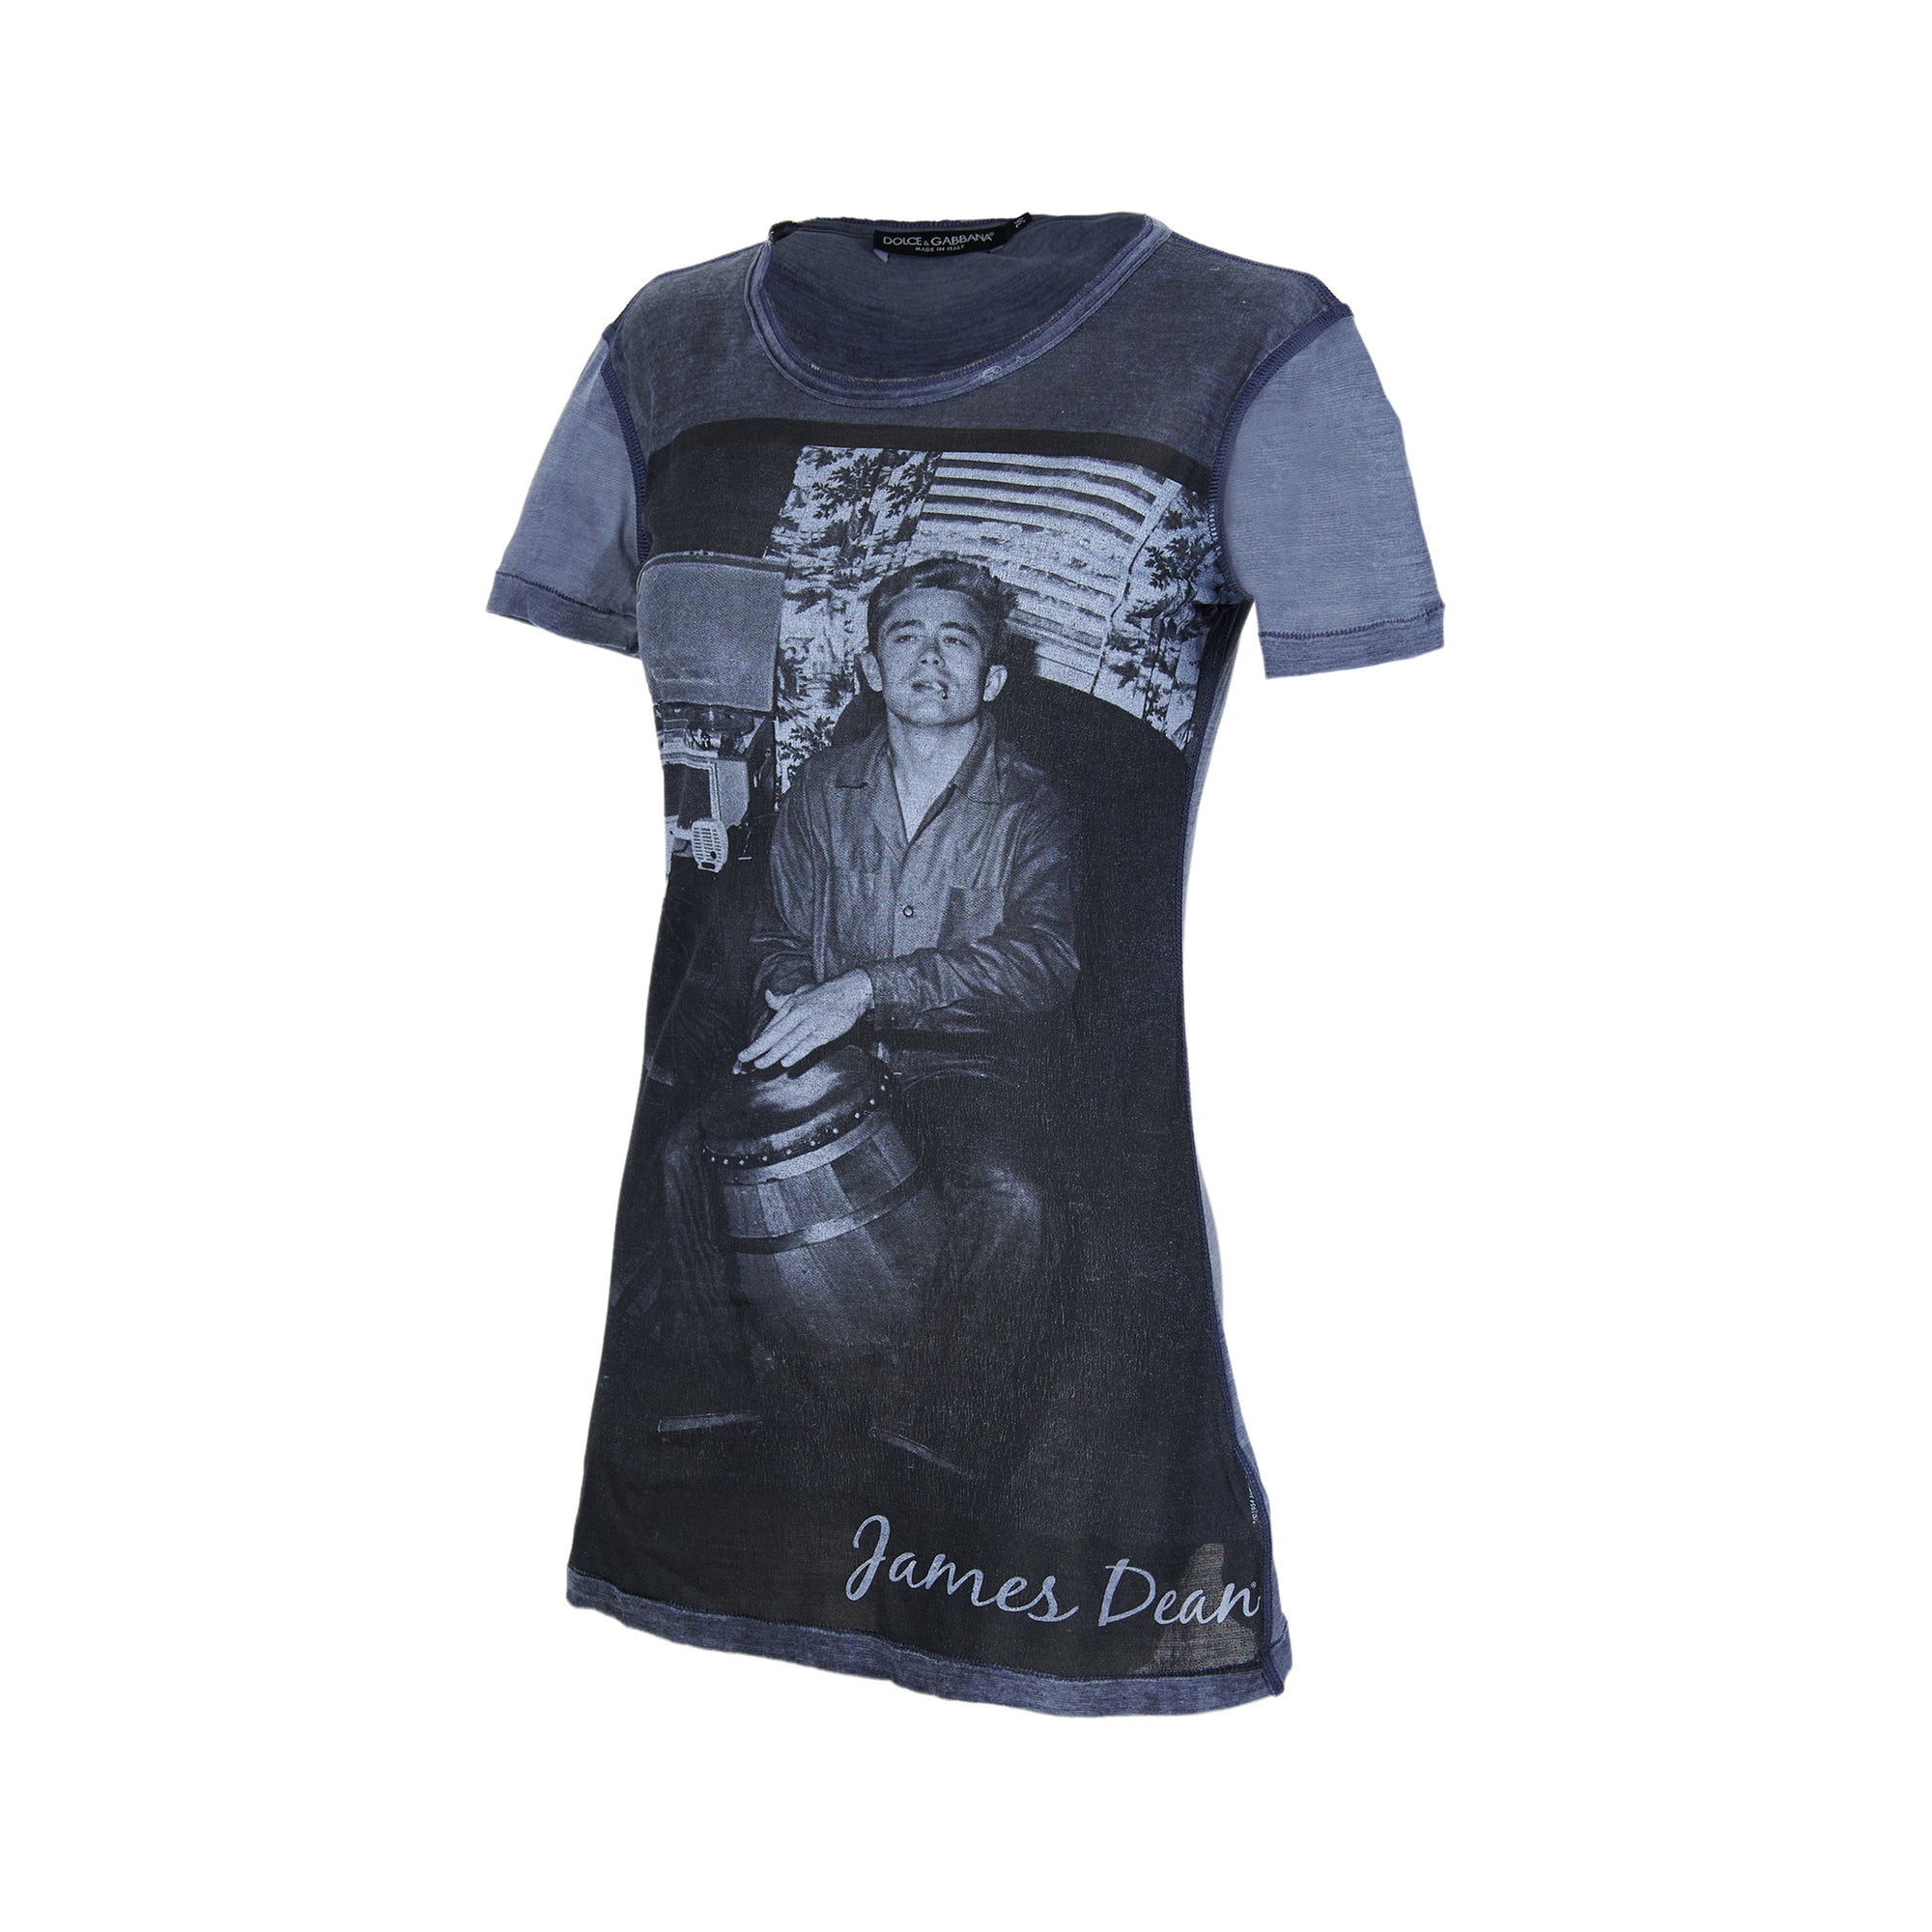 Dolce & Gabbana James Dean Print T-shirt